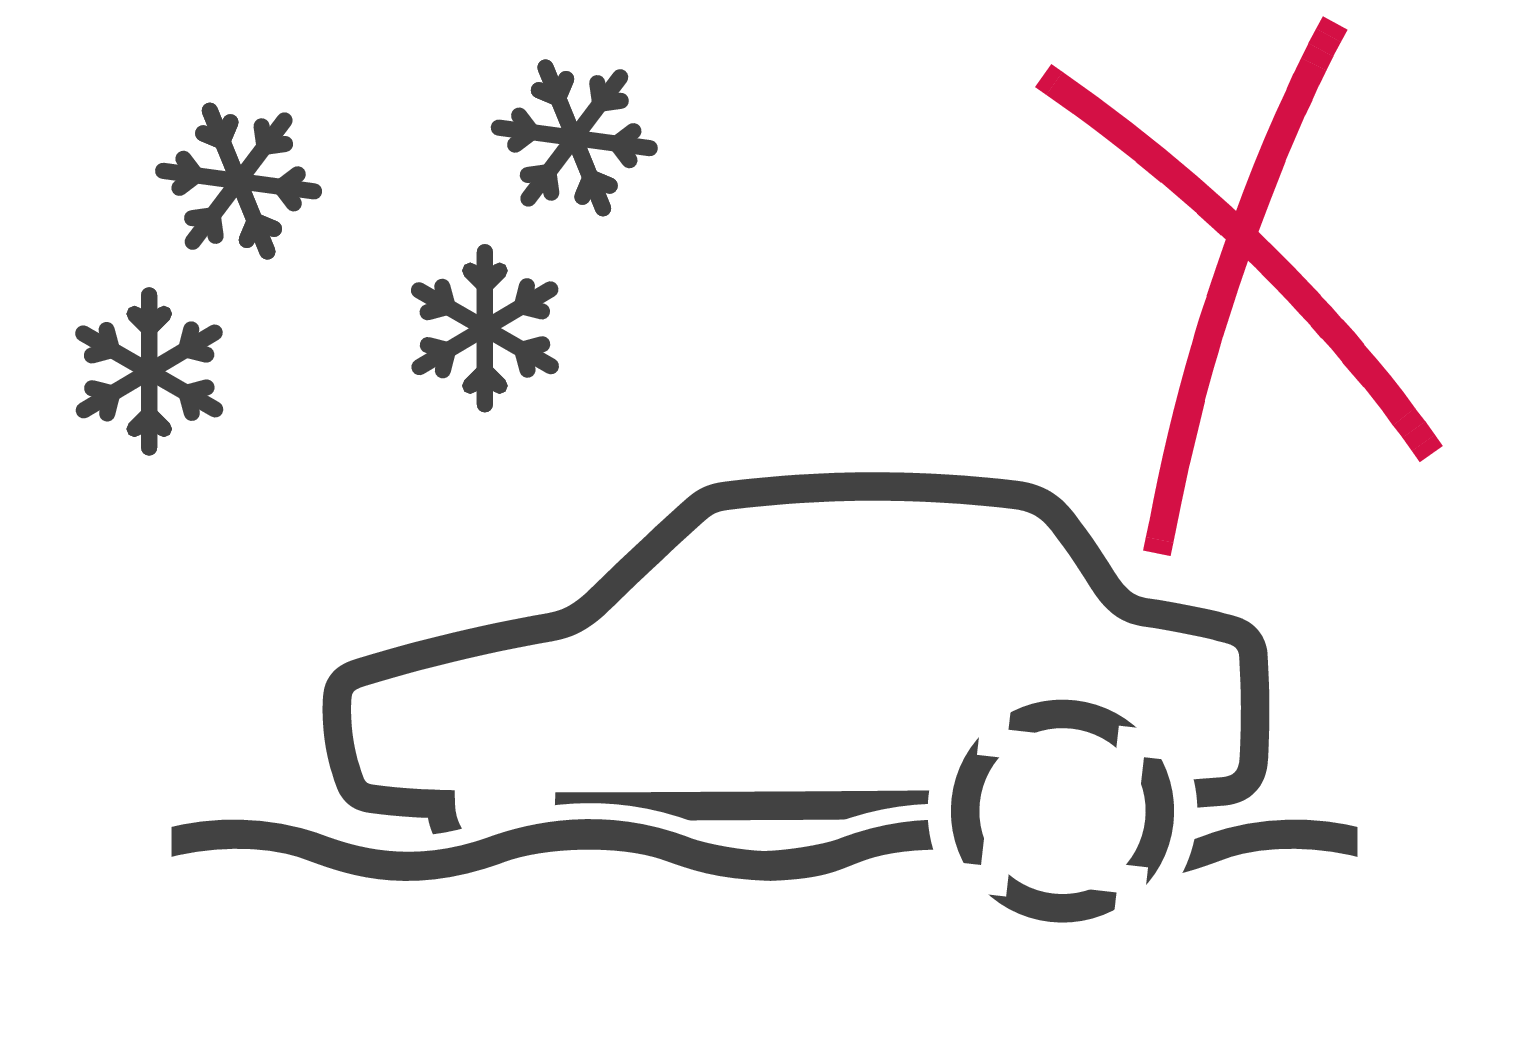 P5-1546–Japan New–60 Om bilen skulle fastna i snö